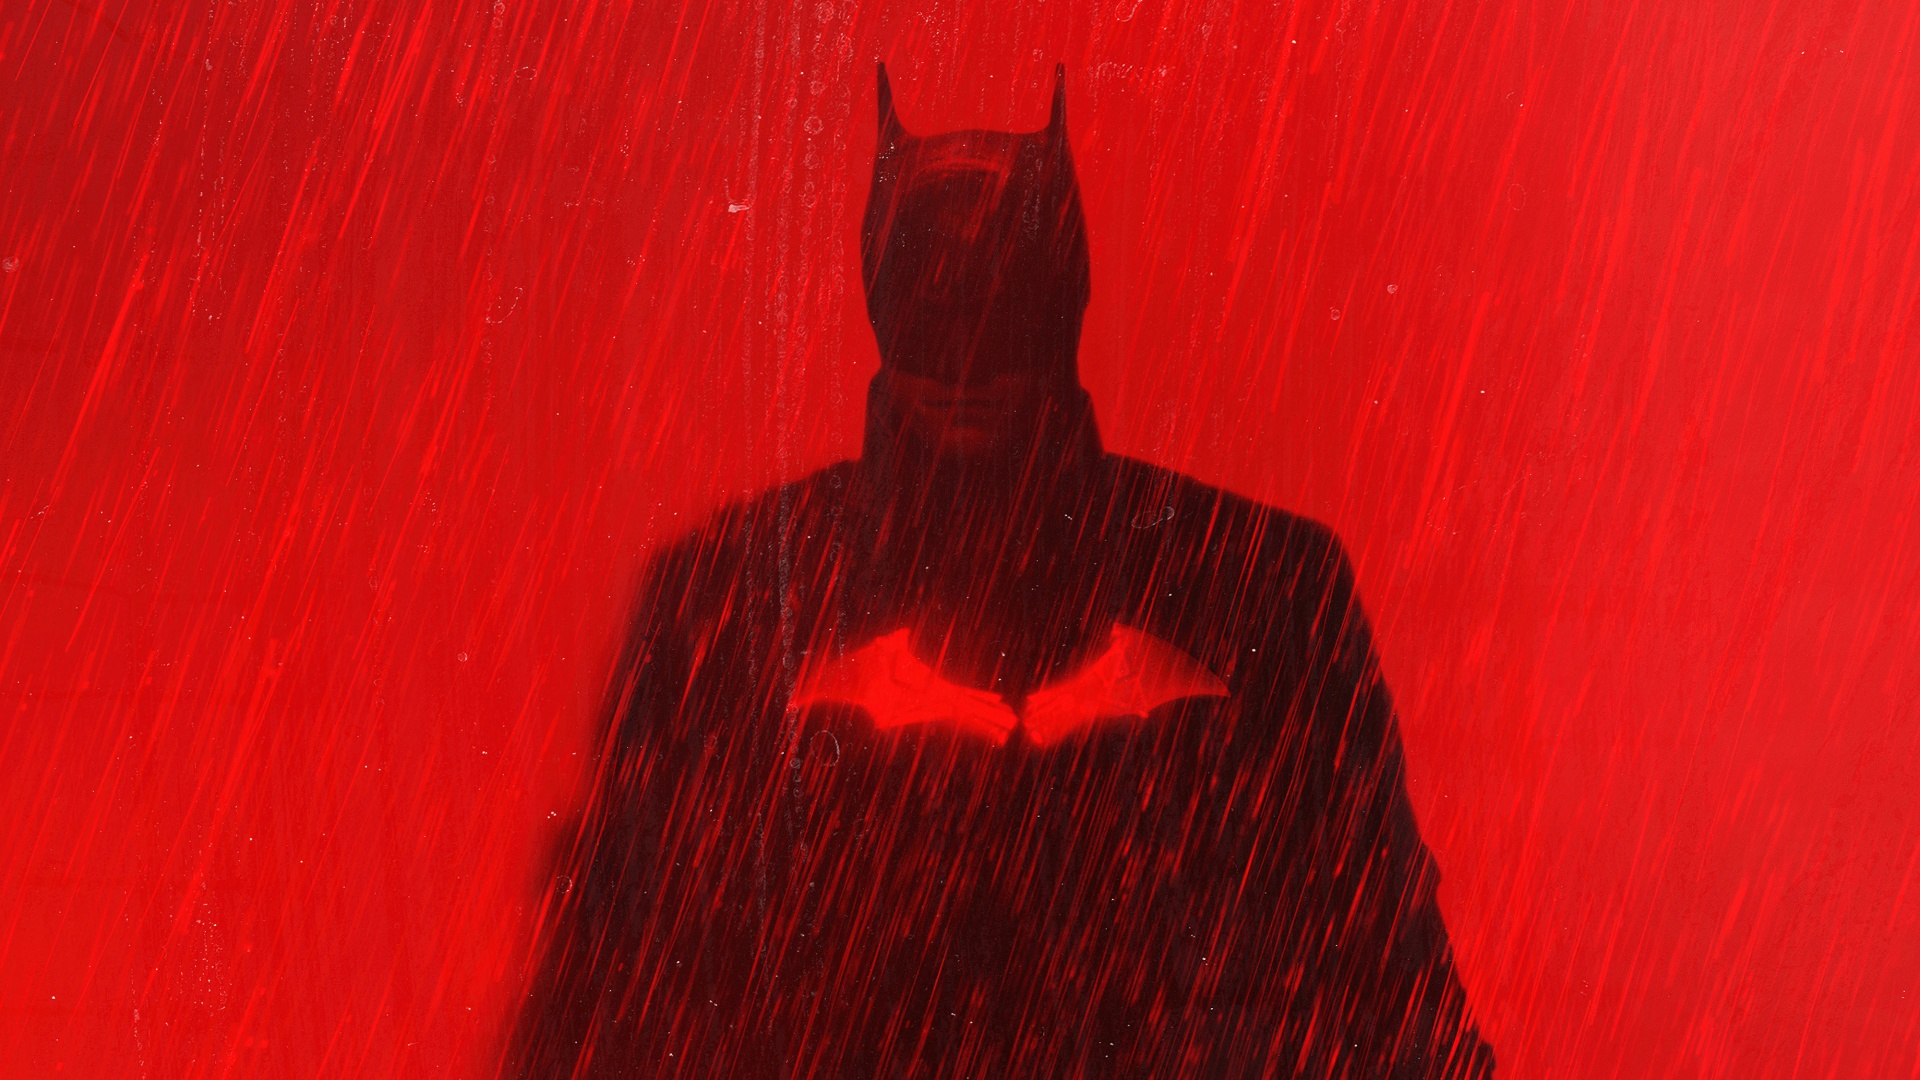 Batman Arkham Knight Batarang (bat Ax) Hd Wallpapers For Mobile Phones And  Laptops : Wallpapers13.com